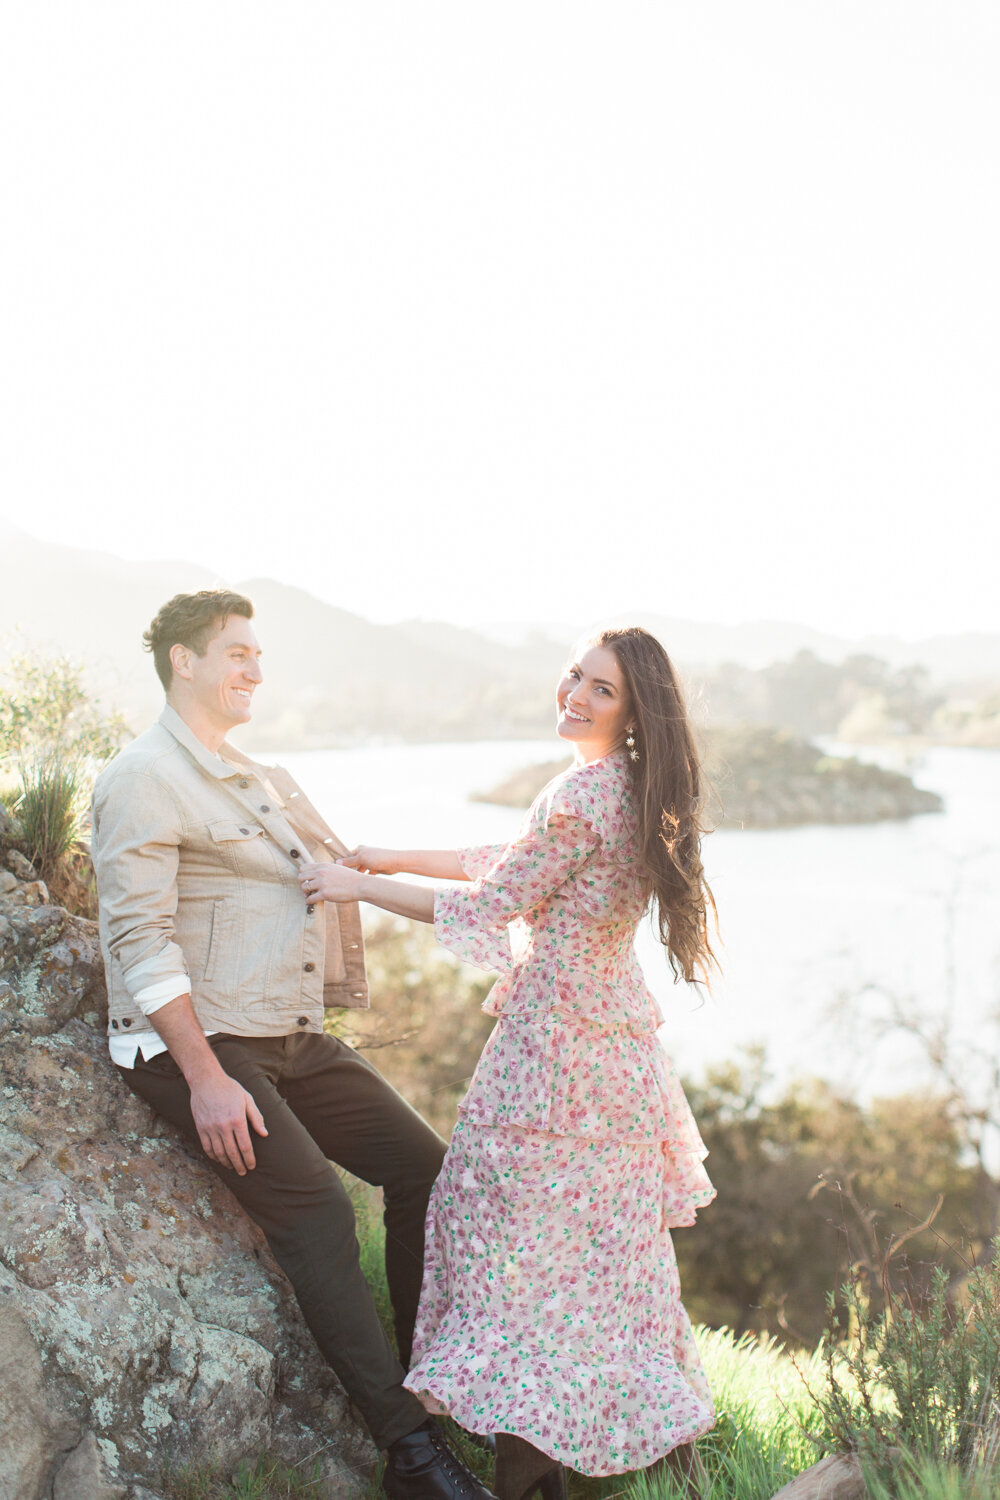 wisteria-photography.com | Wisteria Photography | Lake Sherwood | Weddings Engagement | Southern California Photographer-16.jpg